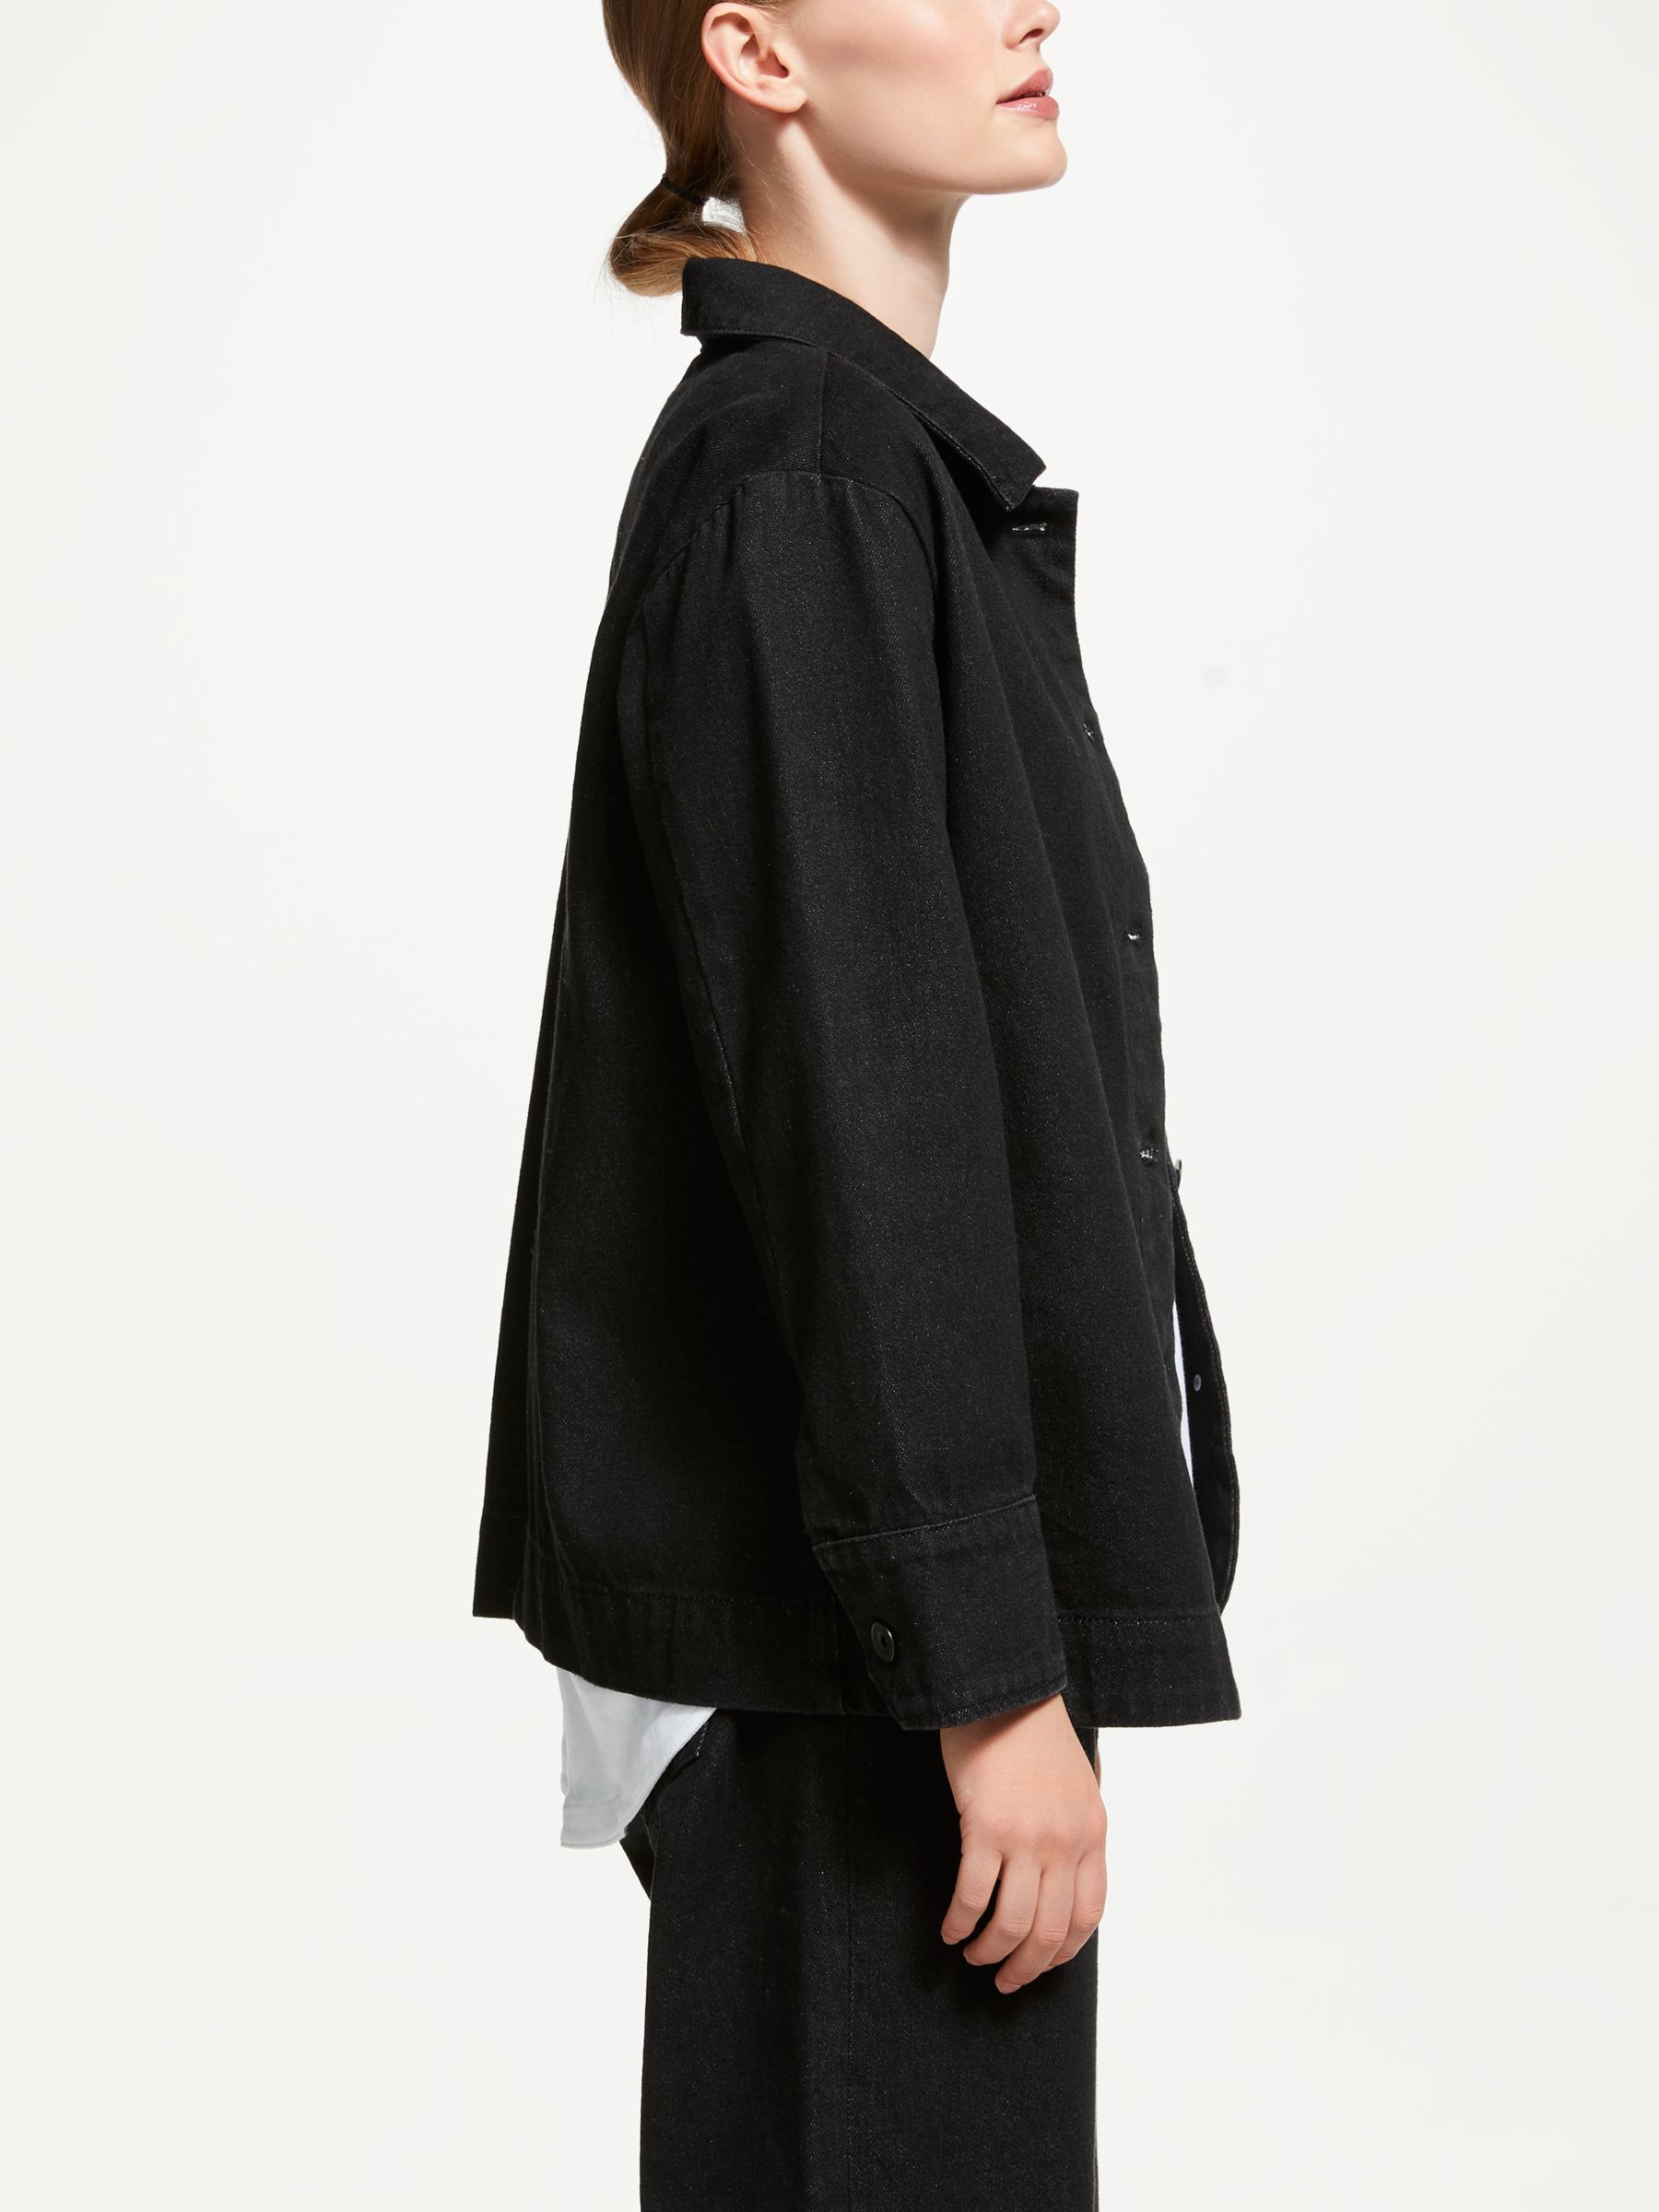 Kin Japanese Workwear Denim Jacket, Black